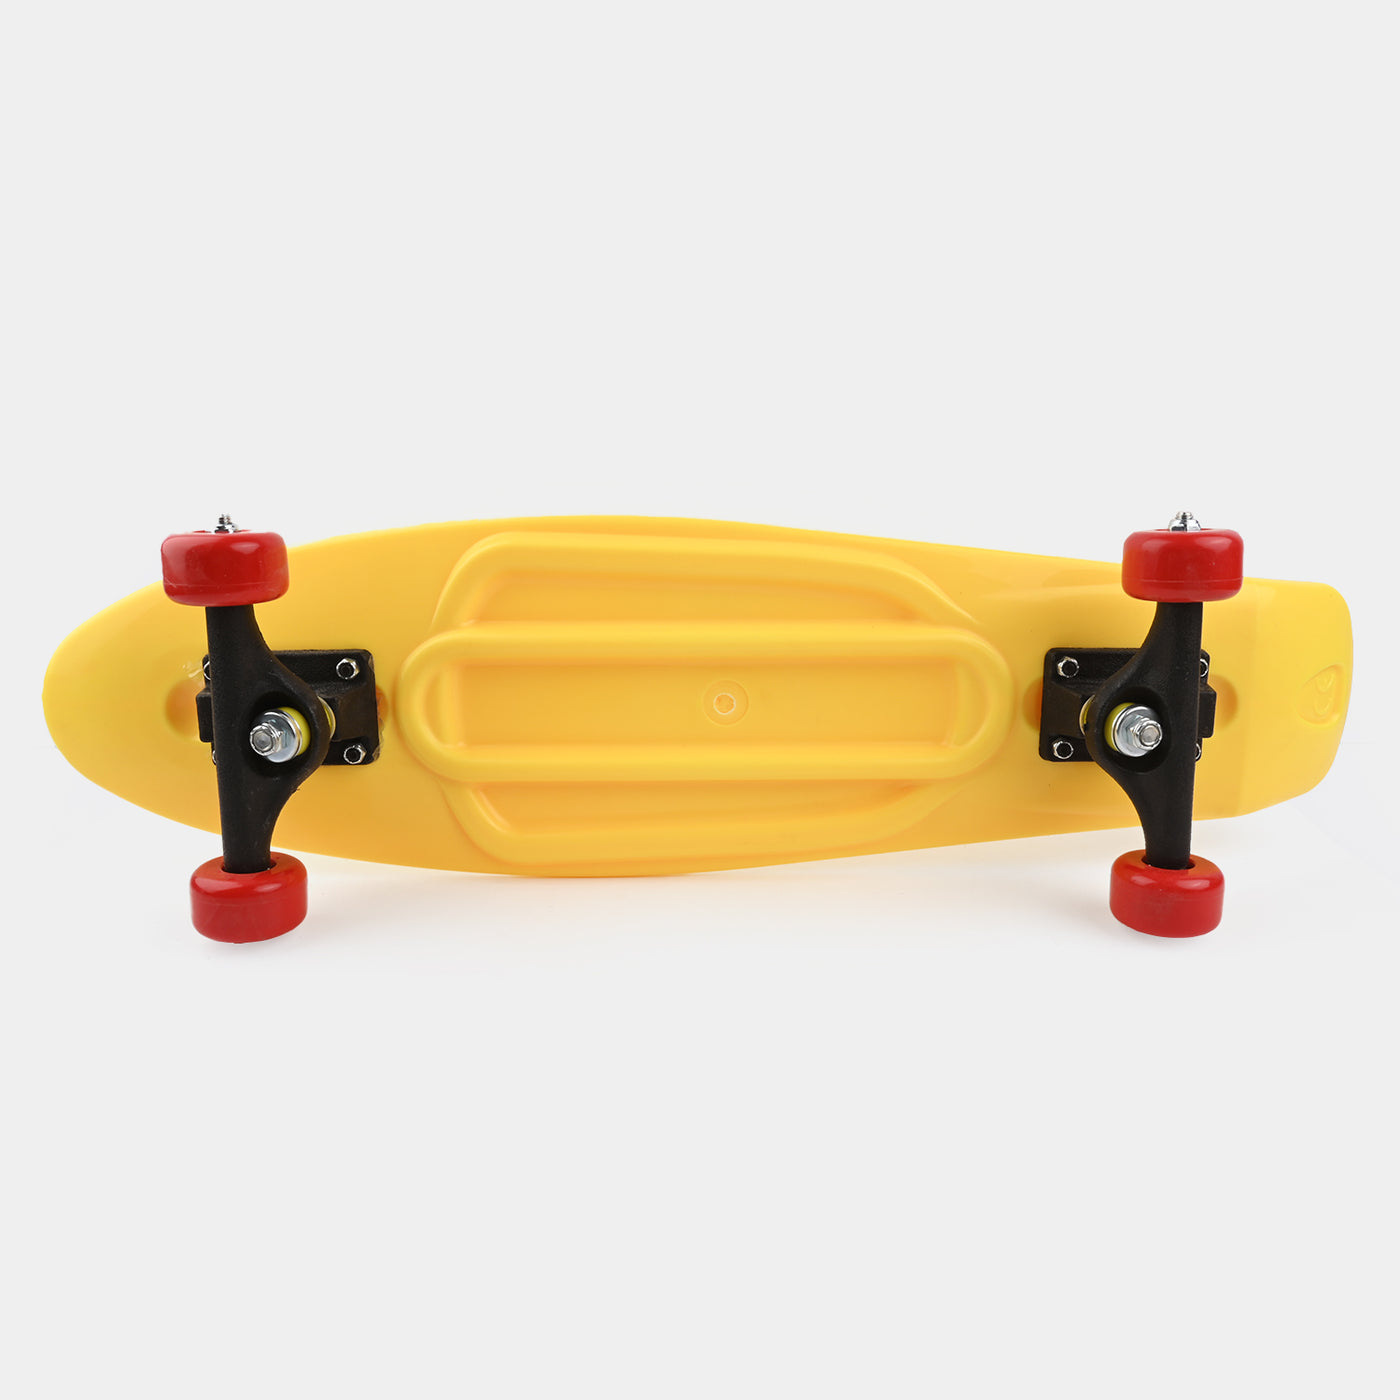 Portable Skate Board For Kids - Large